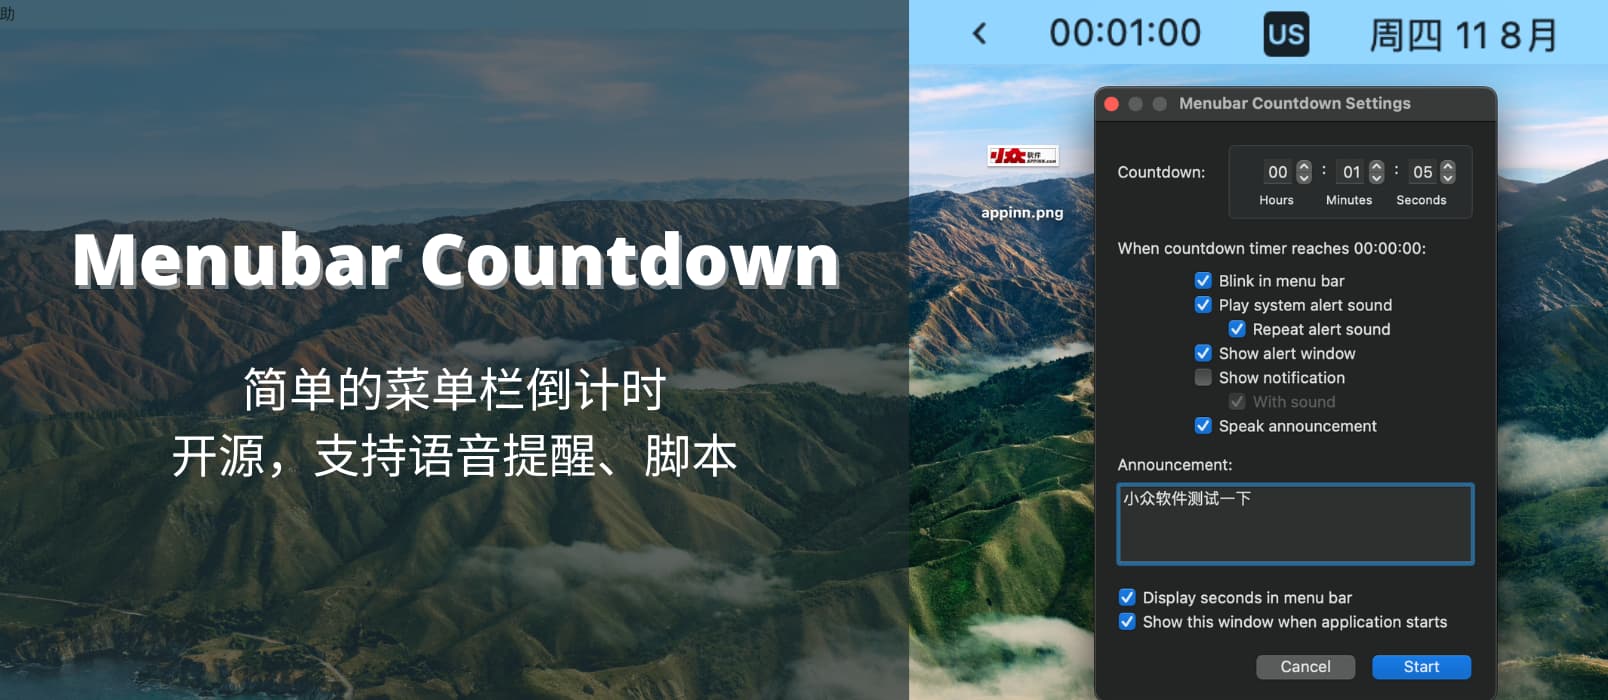 Menubar Countdown – 简单的菜单栏倒计时工具，支持语音提醒、脚本控制[macOS]